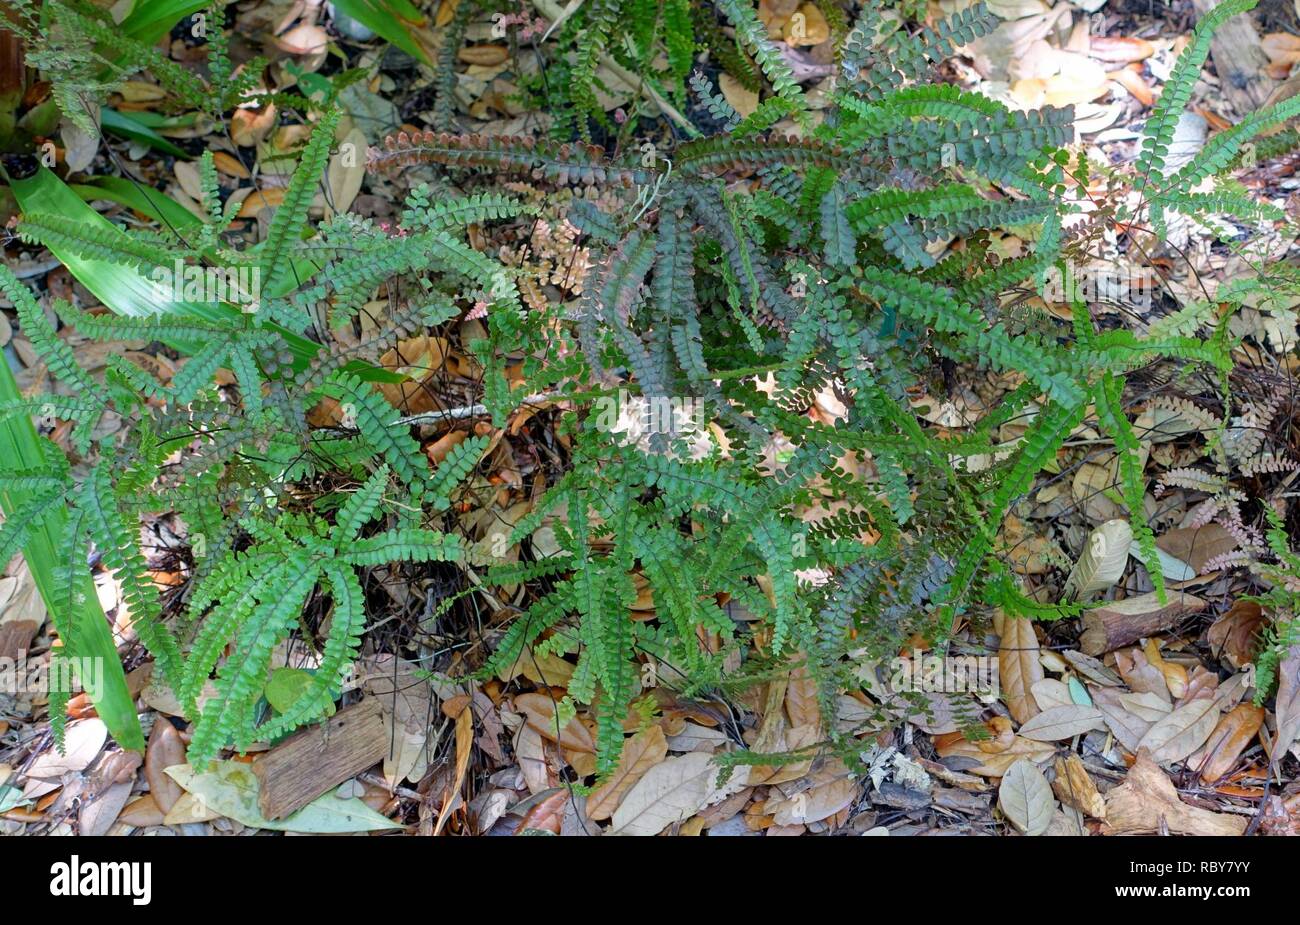 Adiantum hispidulum - Marie Selby Botanical Gardens - Sarasota, Florida - DSC01802. Stock Photo